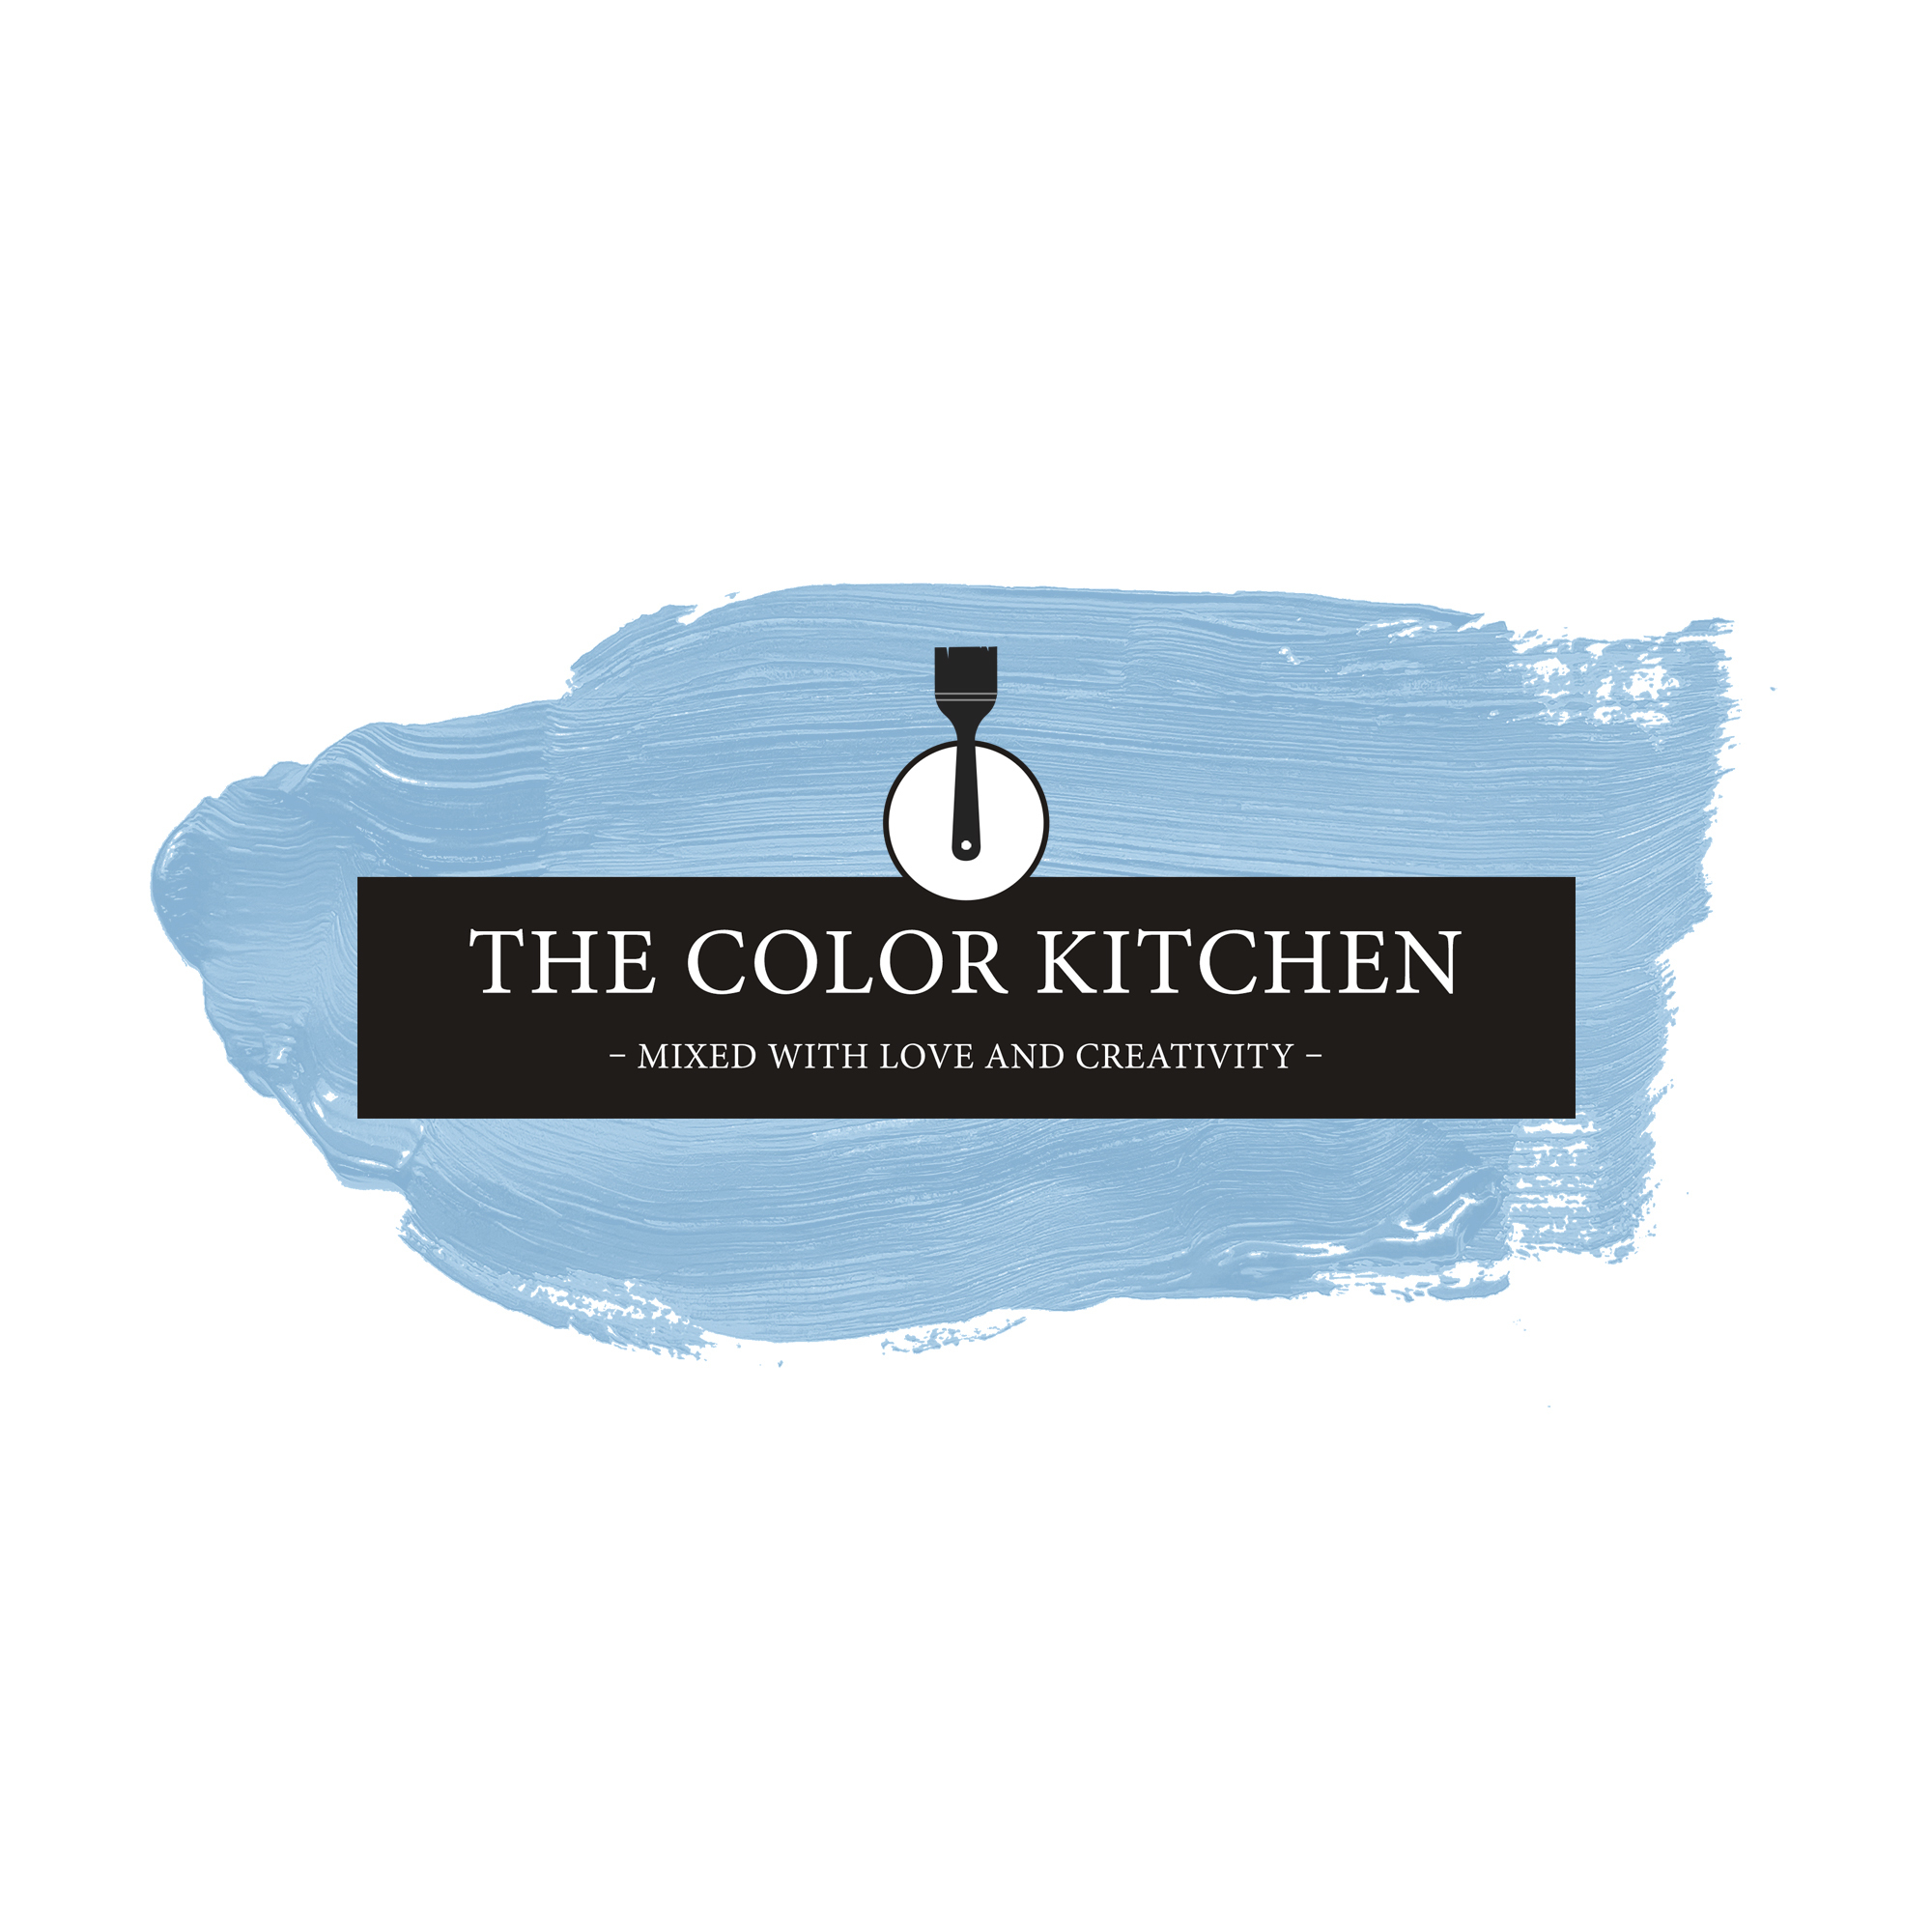 The Color Kitchen Soft Sky 5 l